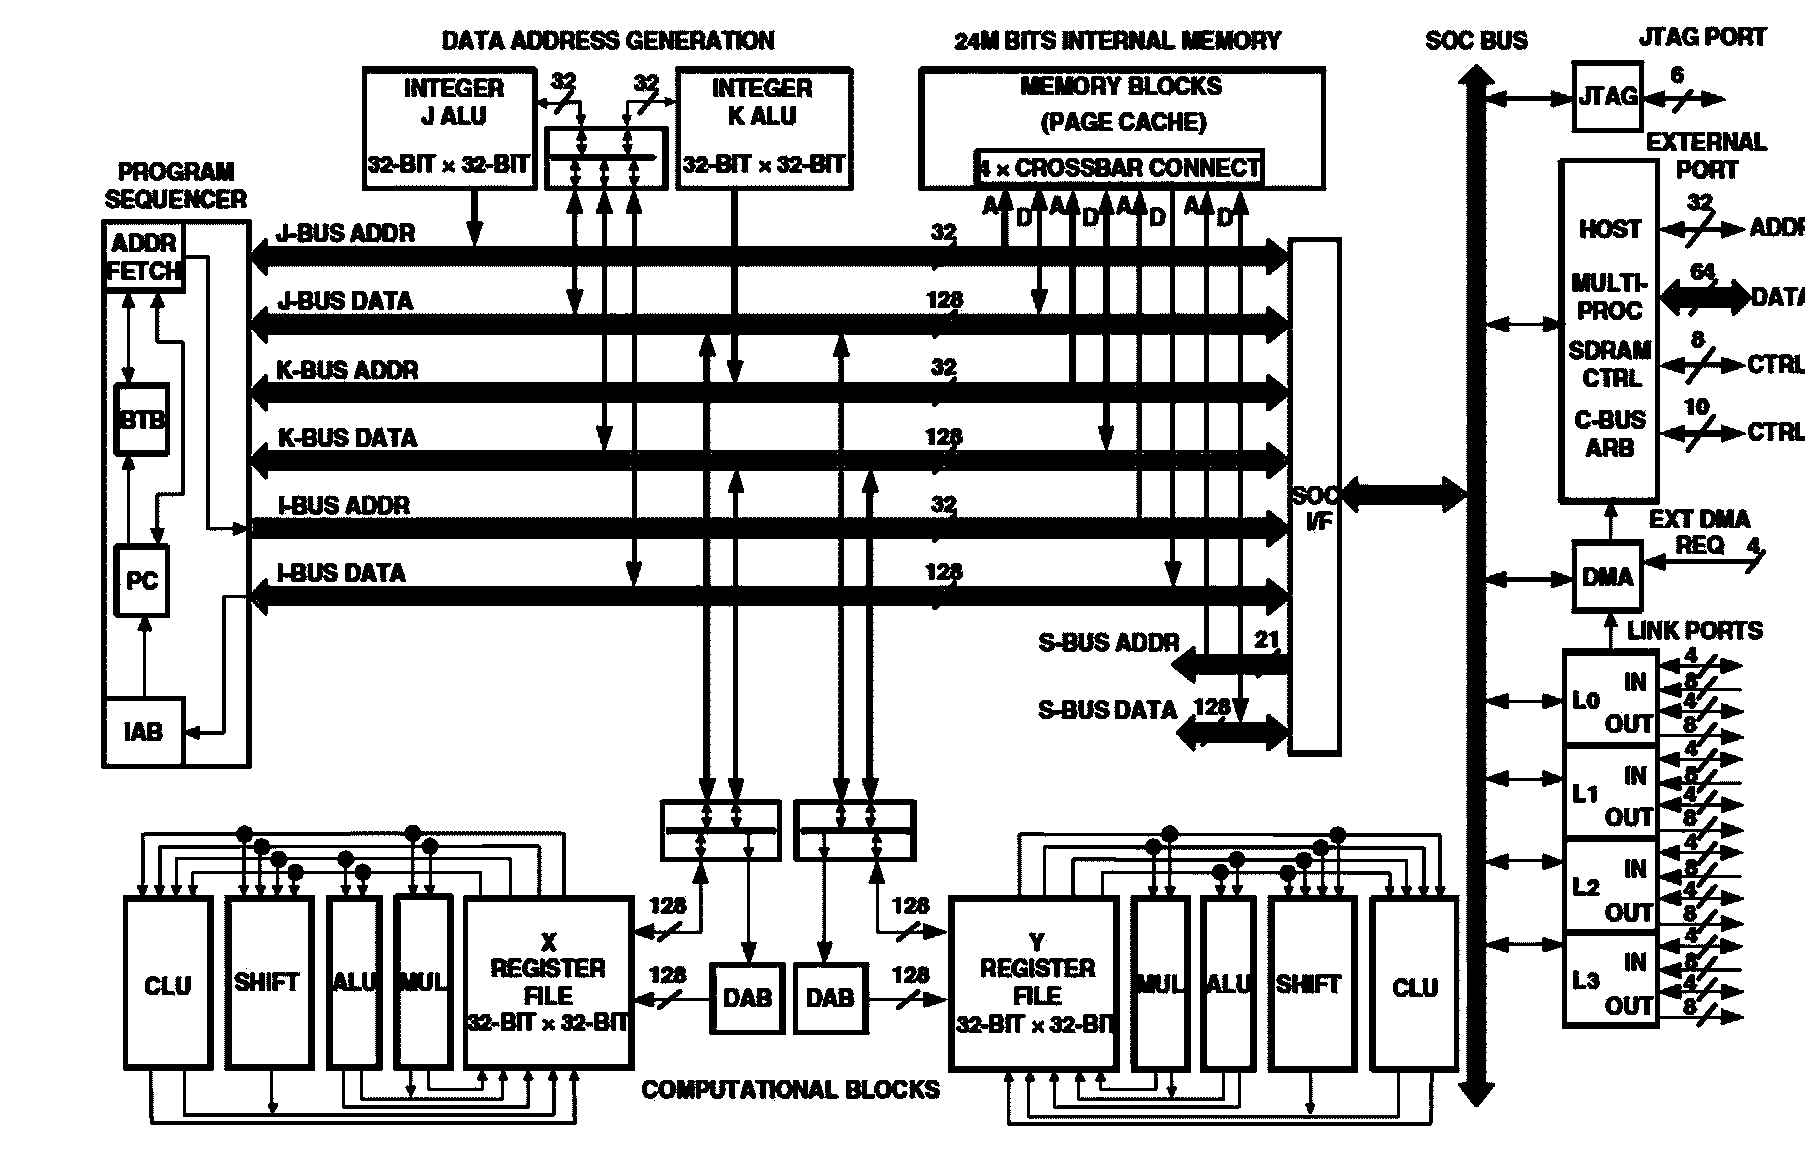 Multi-DSP parallel processing board based on CPCI-E bus